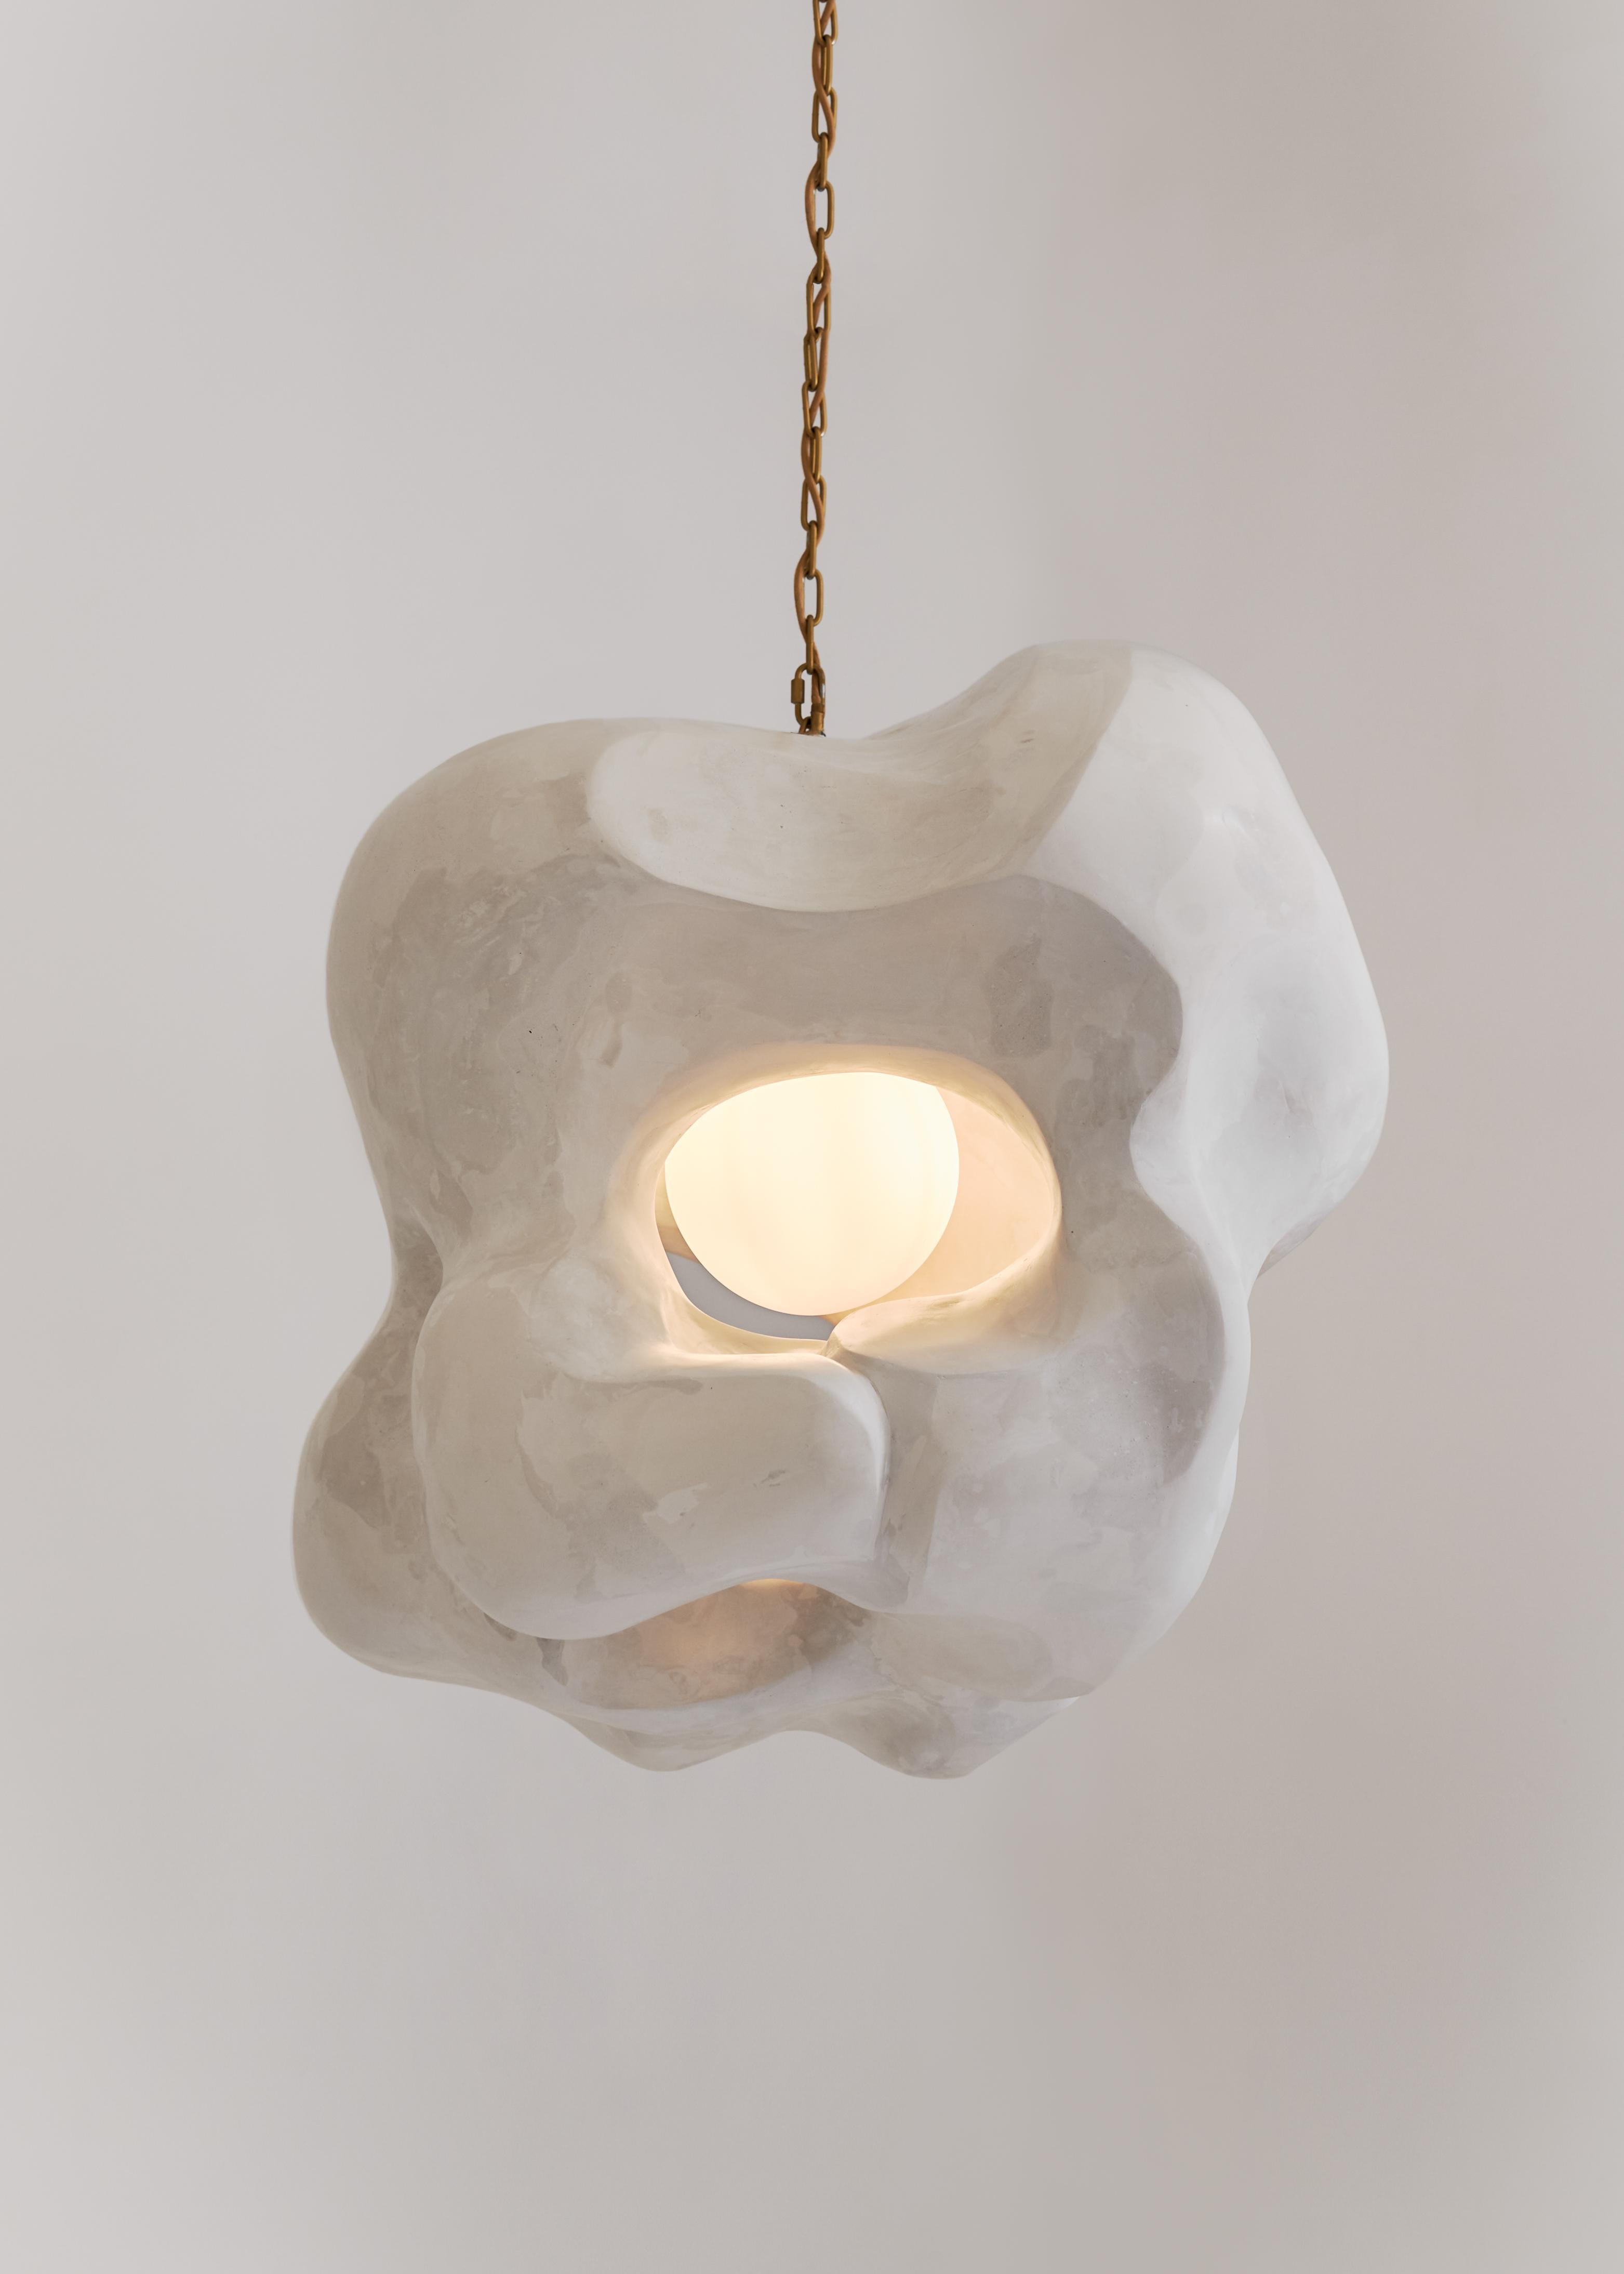 Organic Modern Large Contemporary Pendant Light, Sculptural Collectible Design 